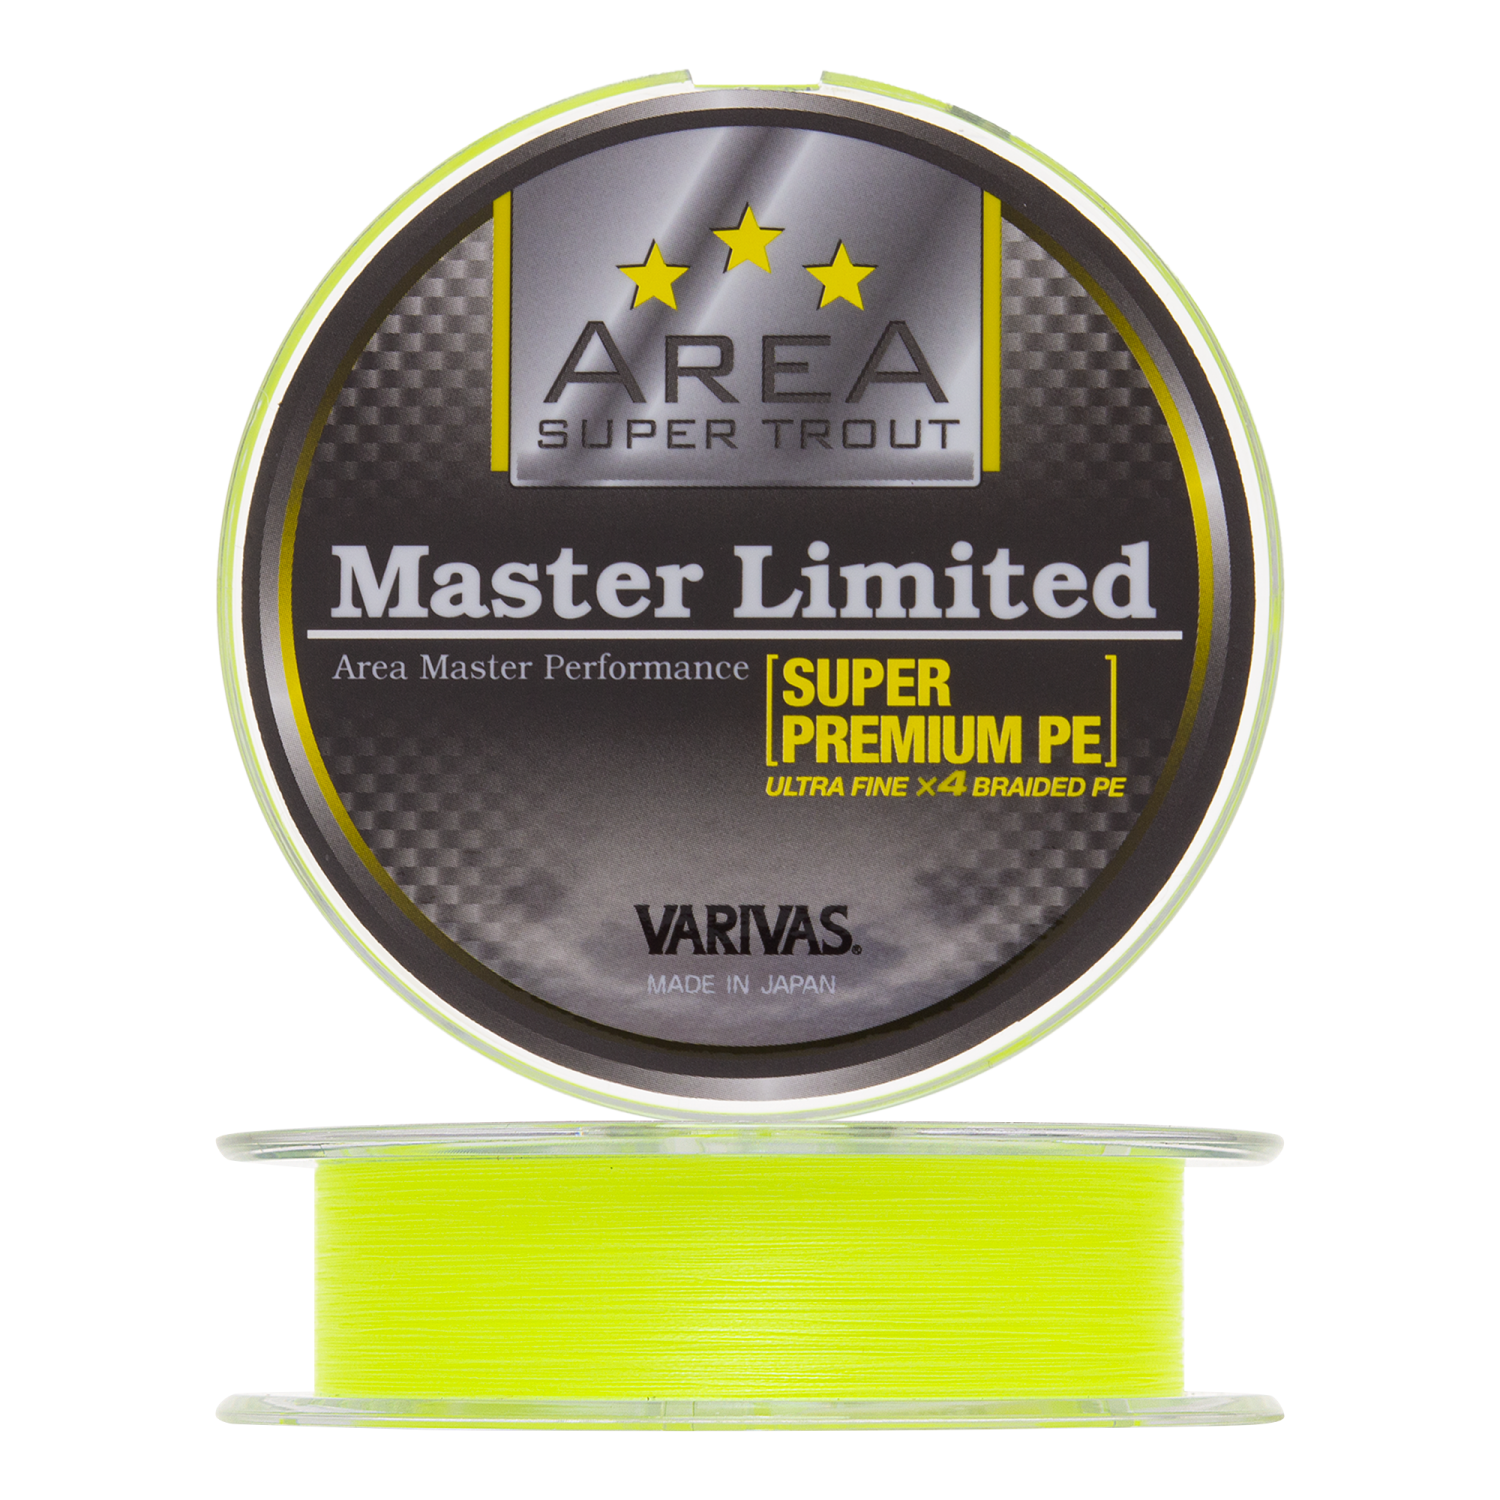 Шнур плетеный Varivas Area Super Trout Master Limited Super Premium PE X4 #0,2 0,074мм 75м (neo yellow)